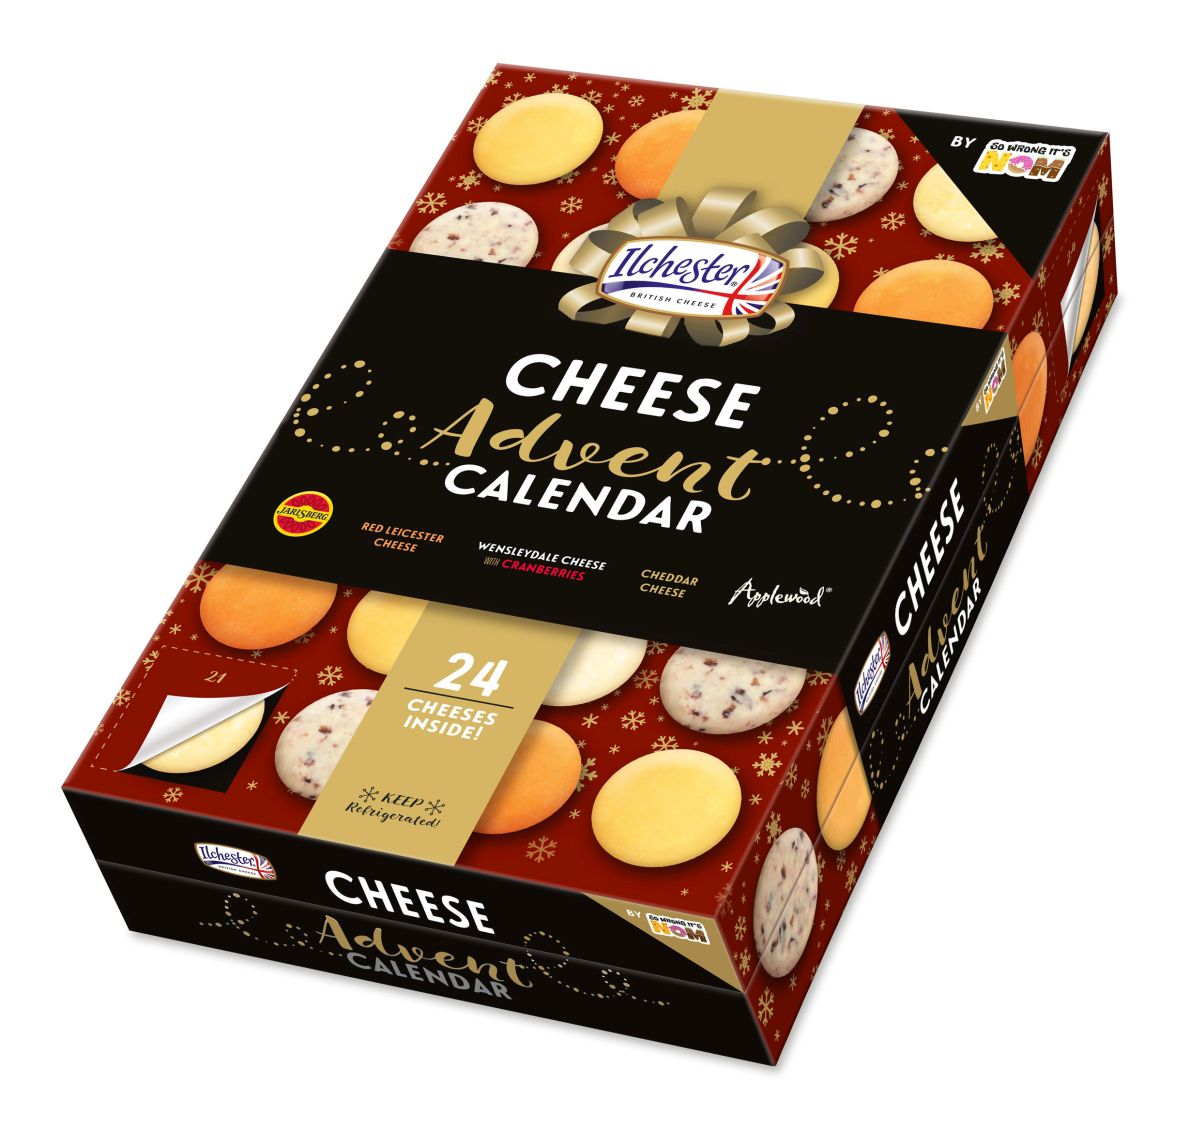 Asda's Cheese Advent Calendar